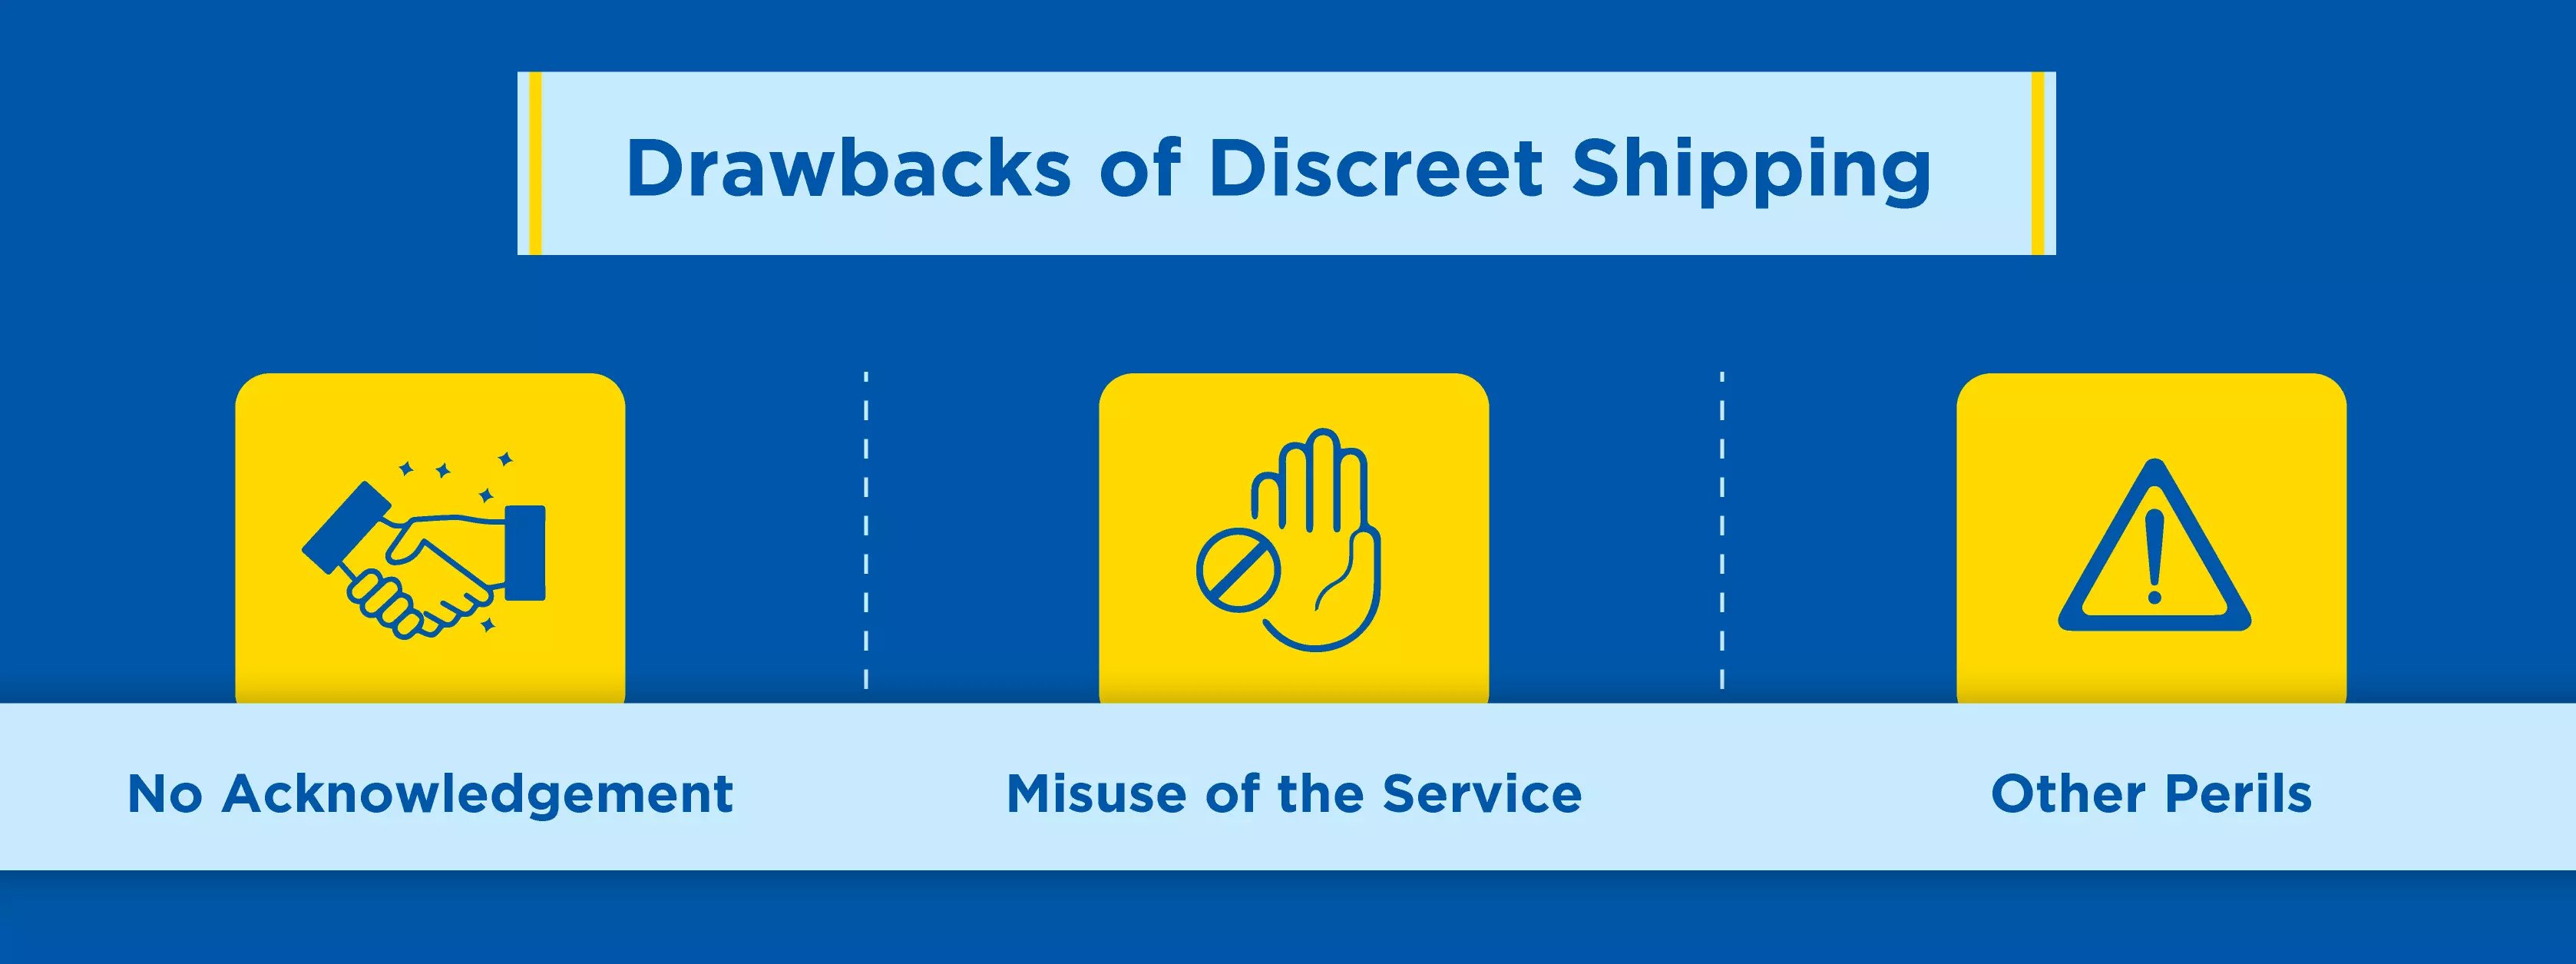 Drawbacks of Discreet Shipping